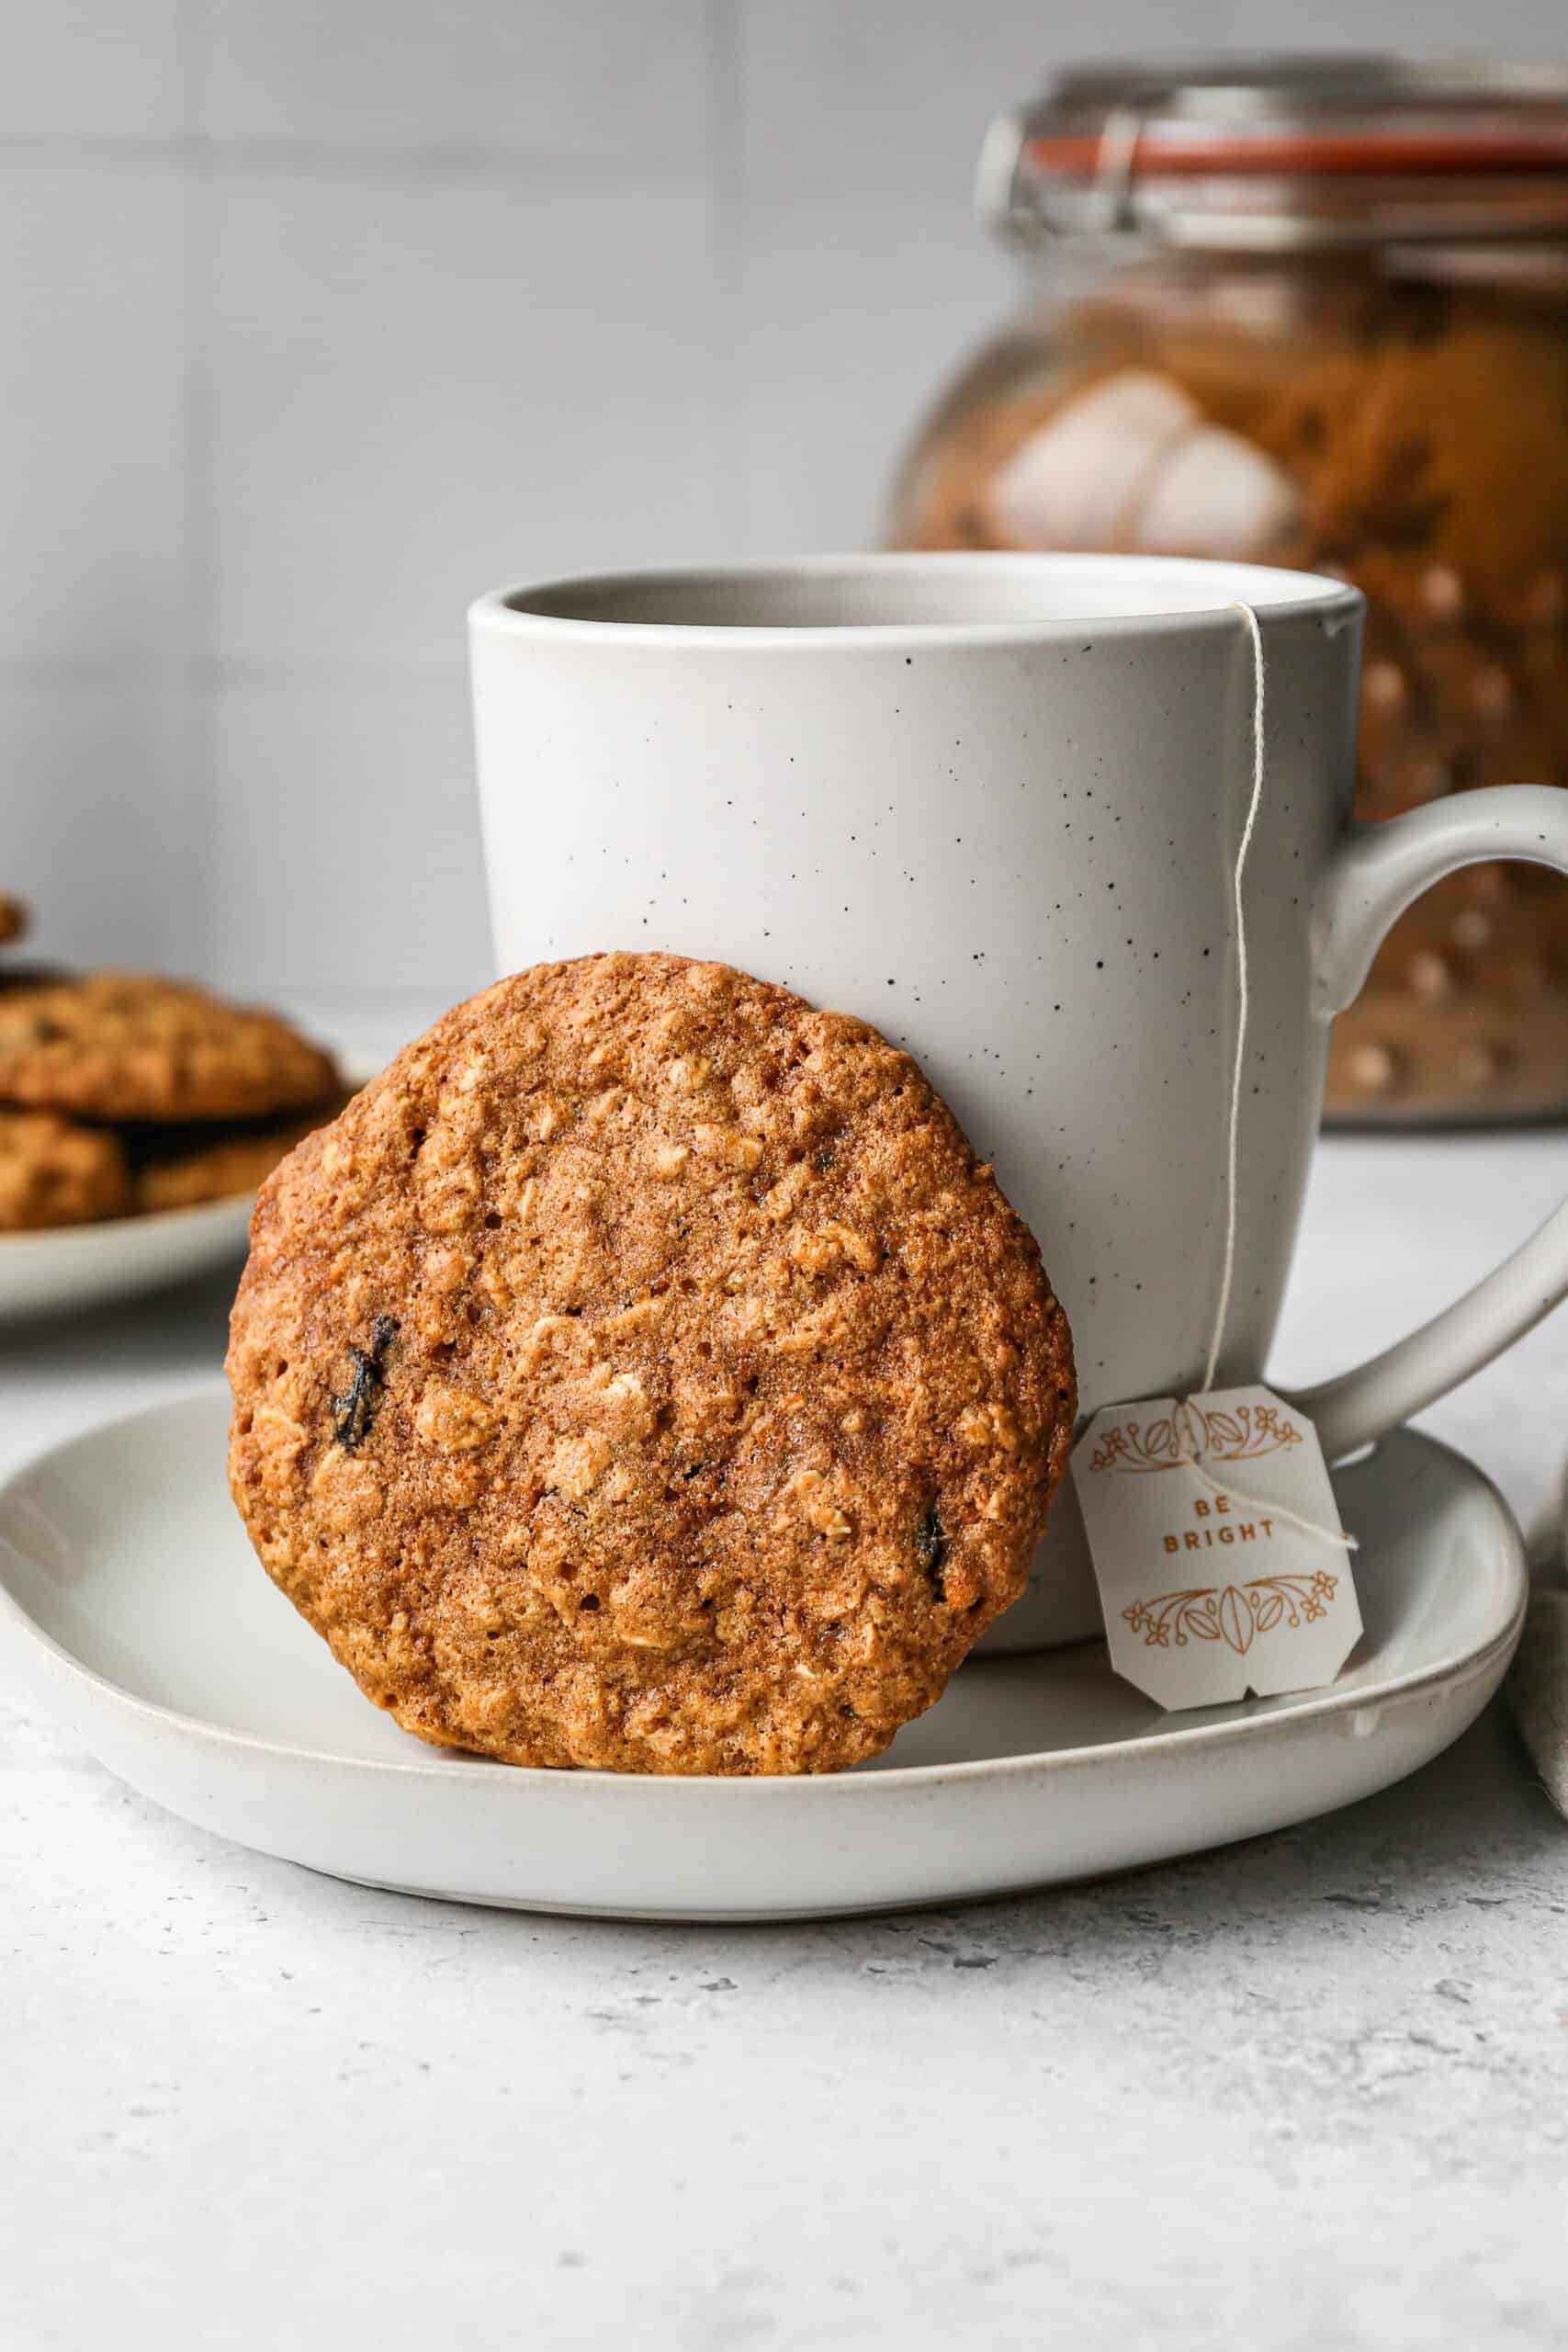 a white mug of tea with a gluten free oatmeal raisin cookie next to it.